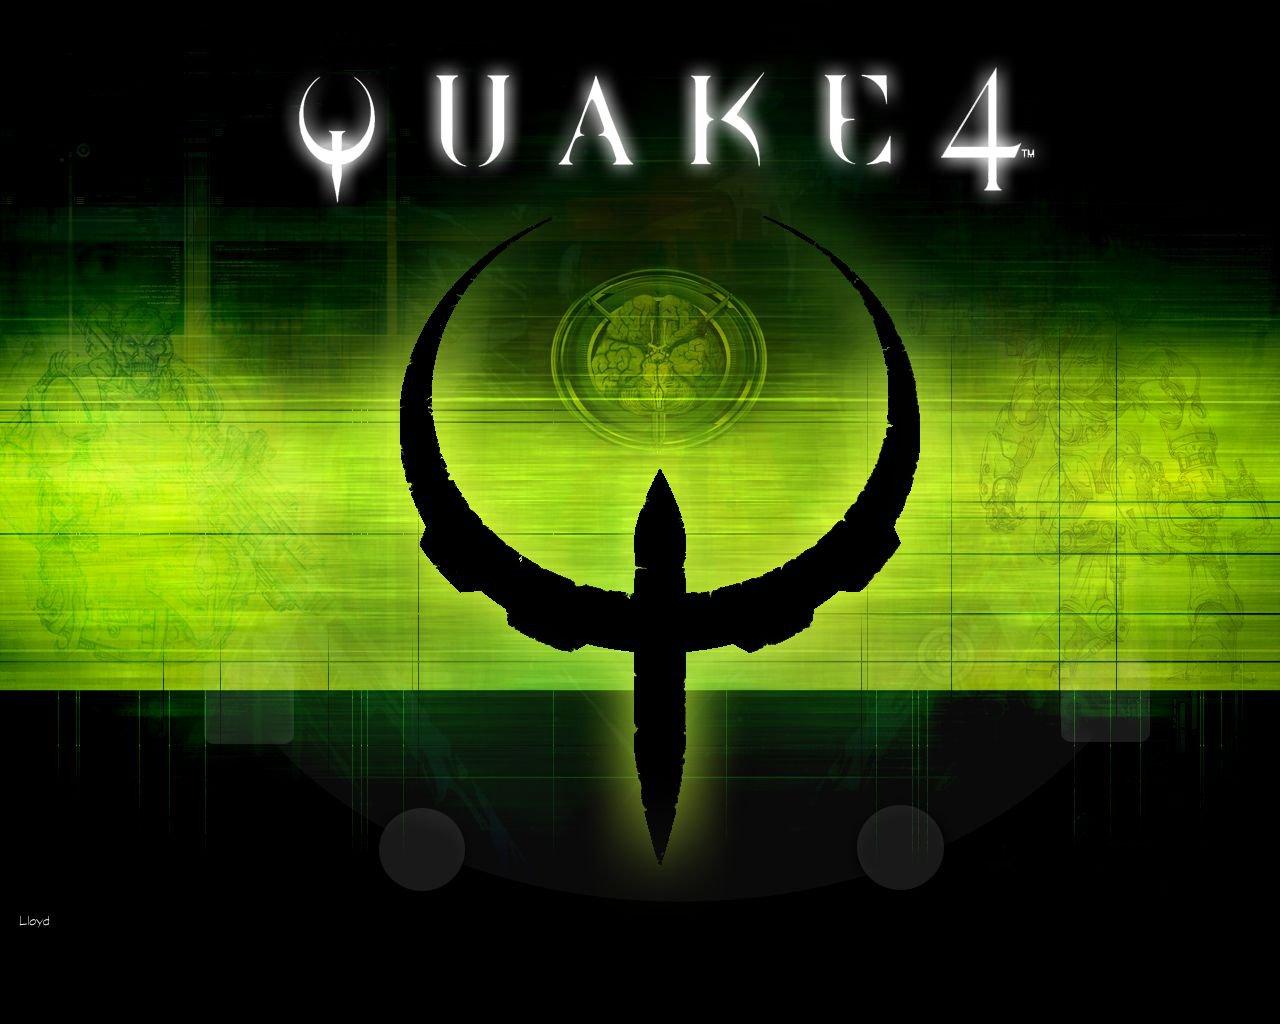 Quake Wallpaper 52 images